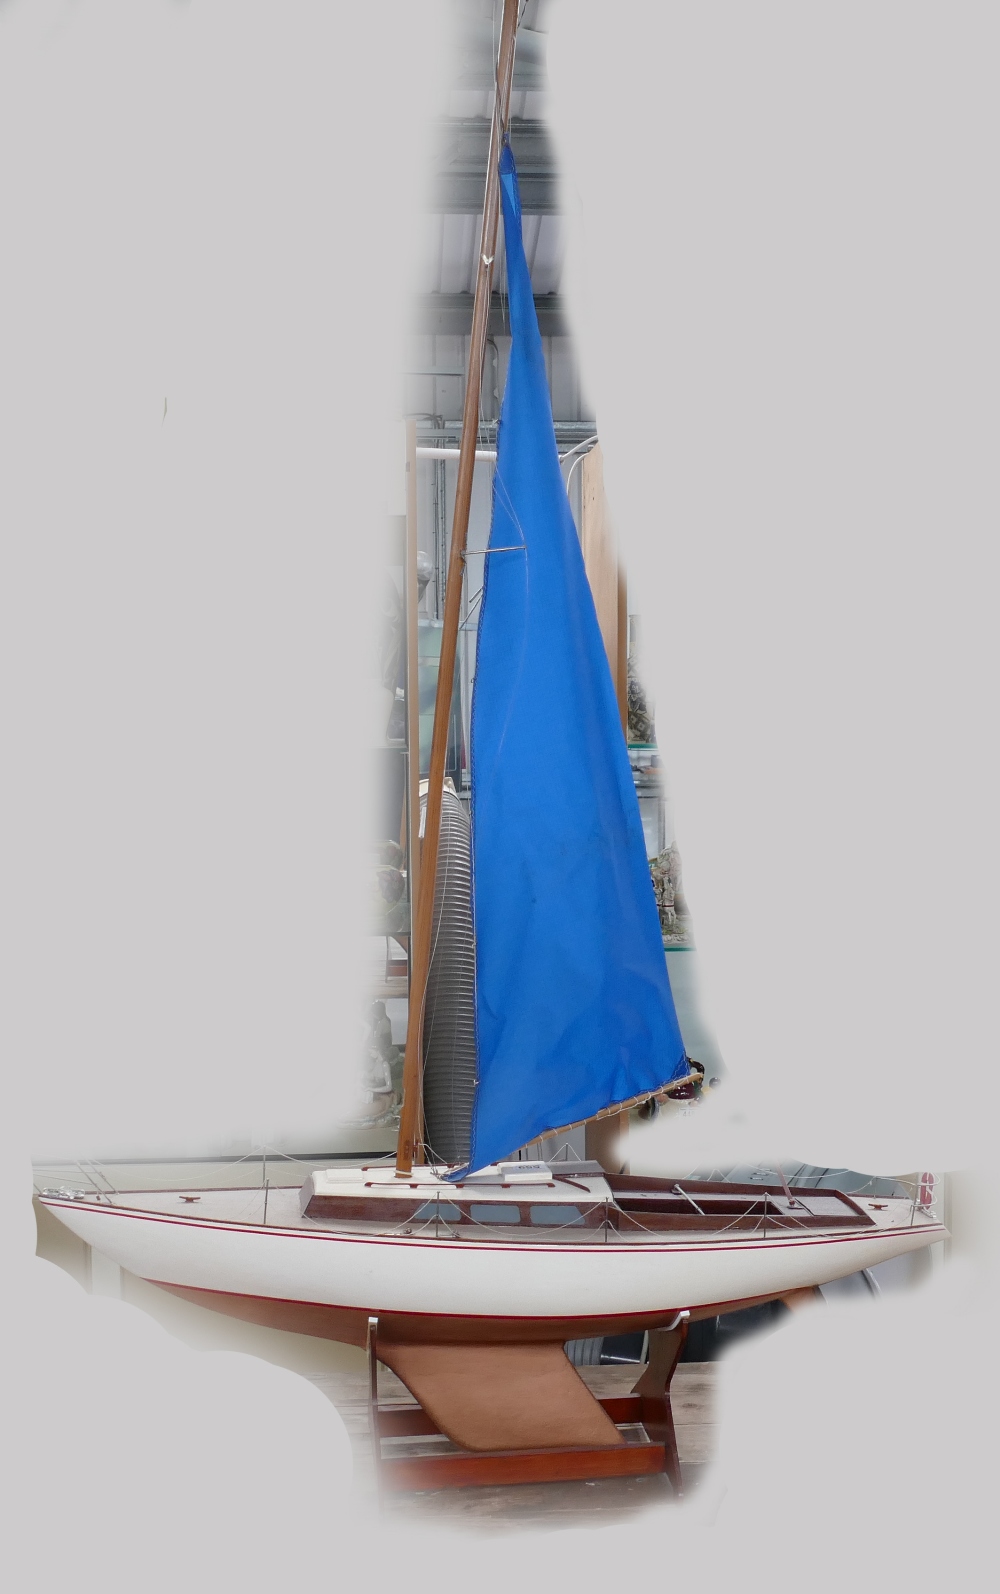 Model of yacht "Optimist" on stand, resi